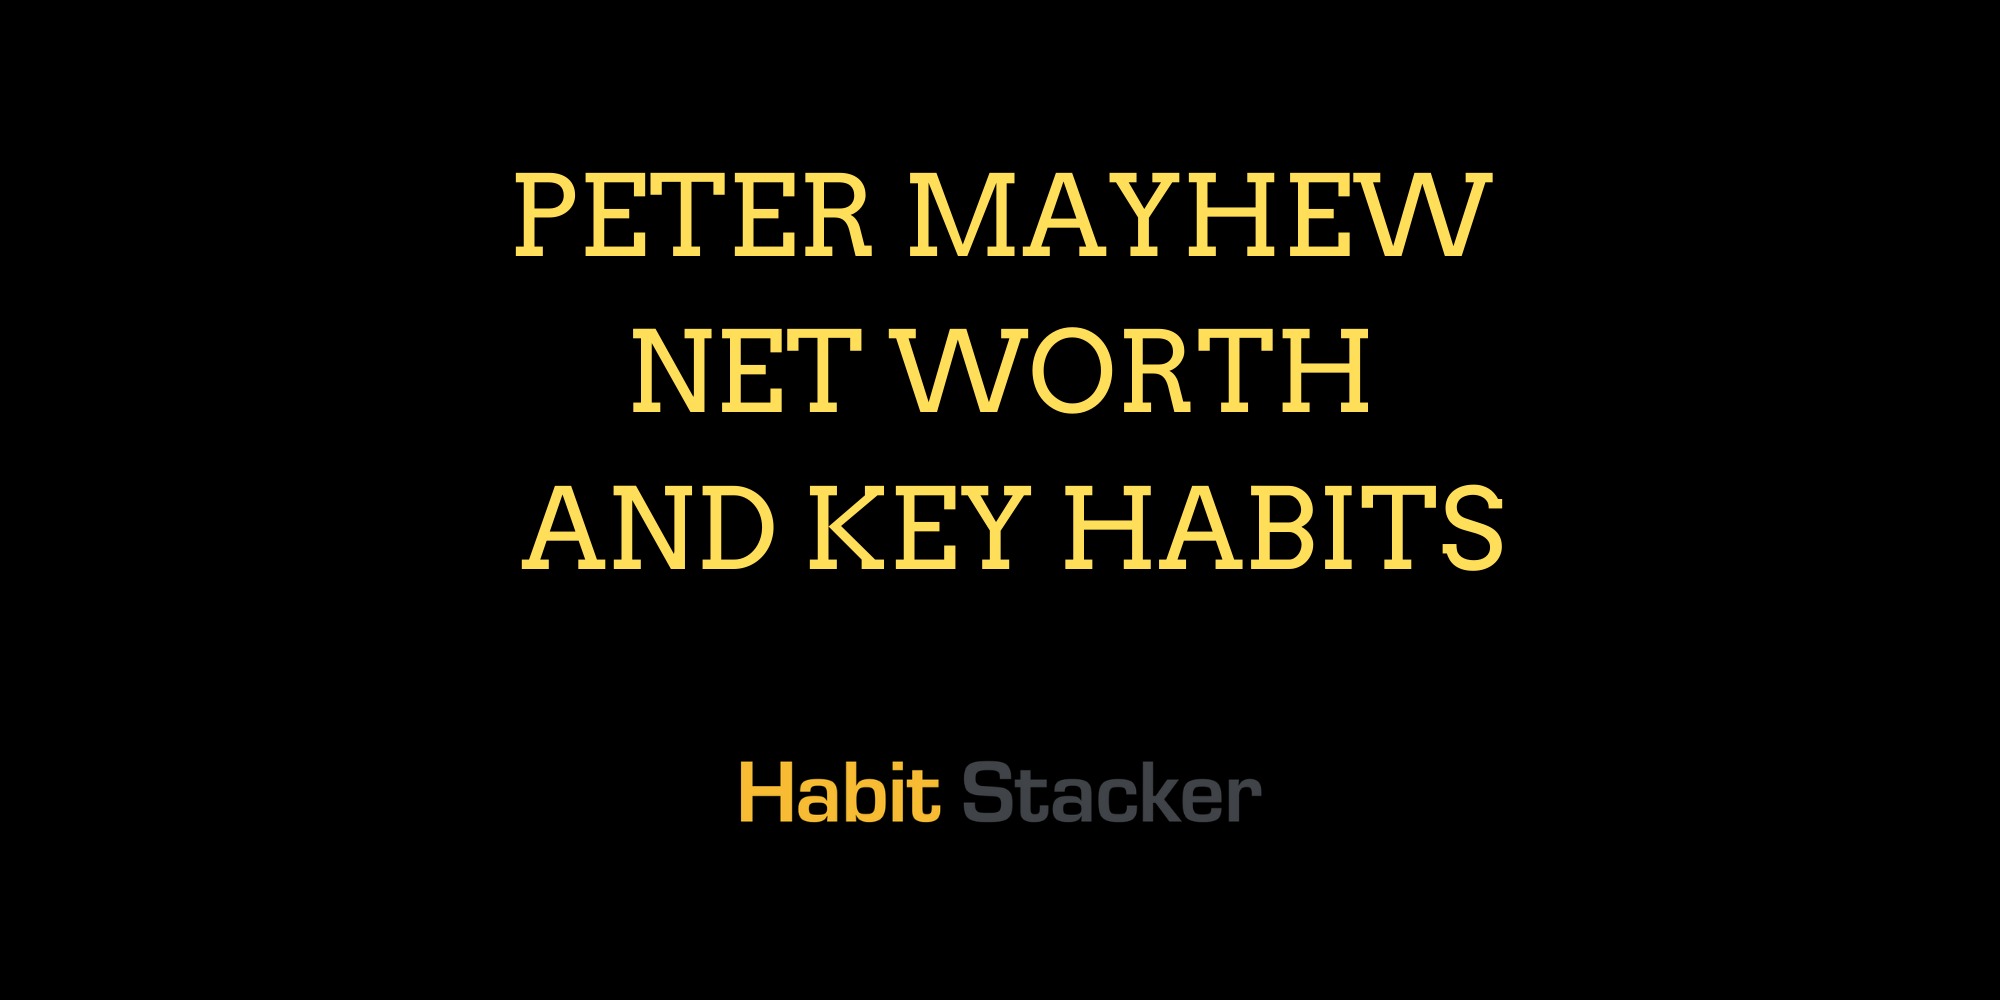 Peter Mayhew Net Worth and Key Habits